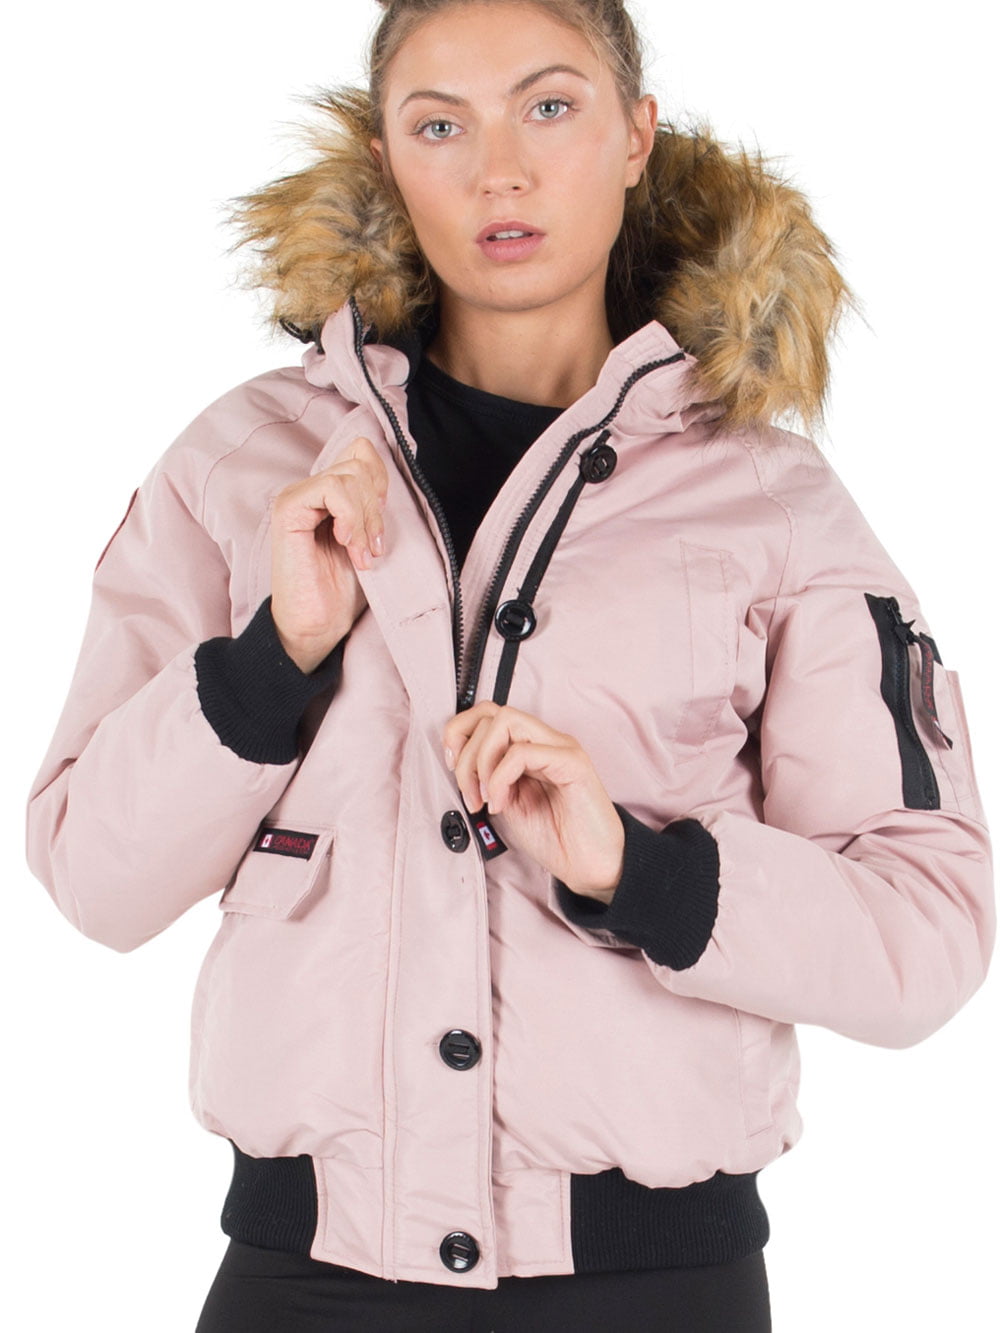 Canada Weather Gear Womens' Insulated Flight Jacket - blush, xl ...